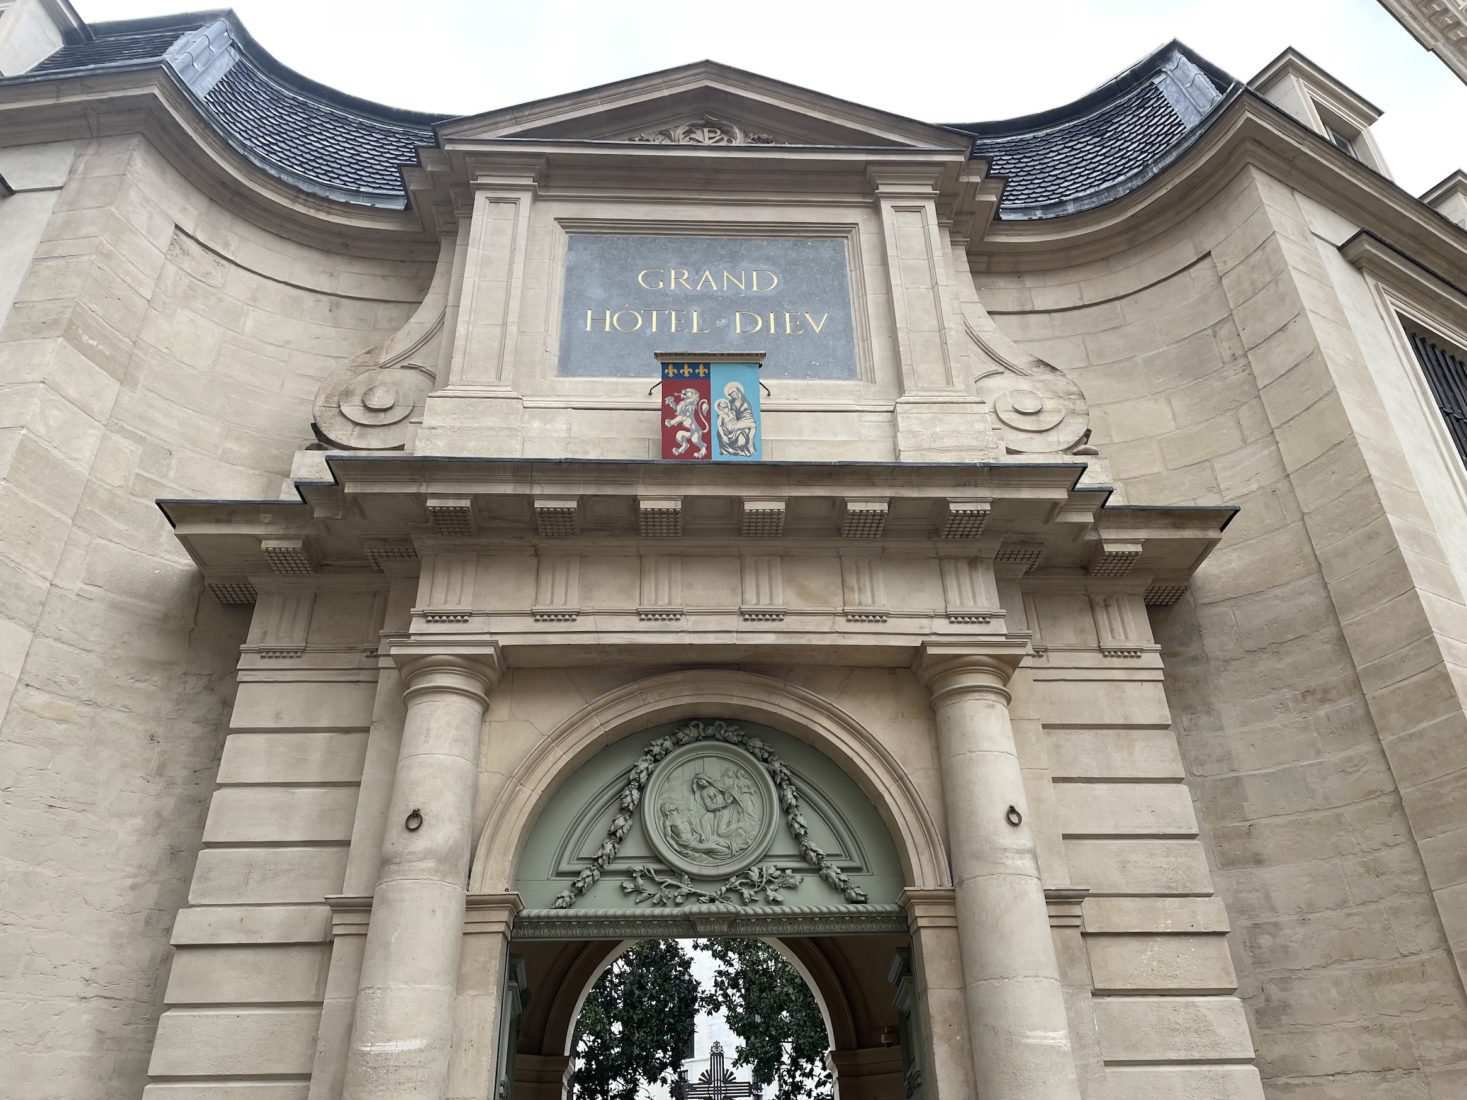 Lyone Grand Hôtel-Dieu façade entrée(©fk) 